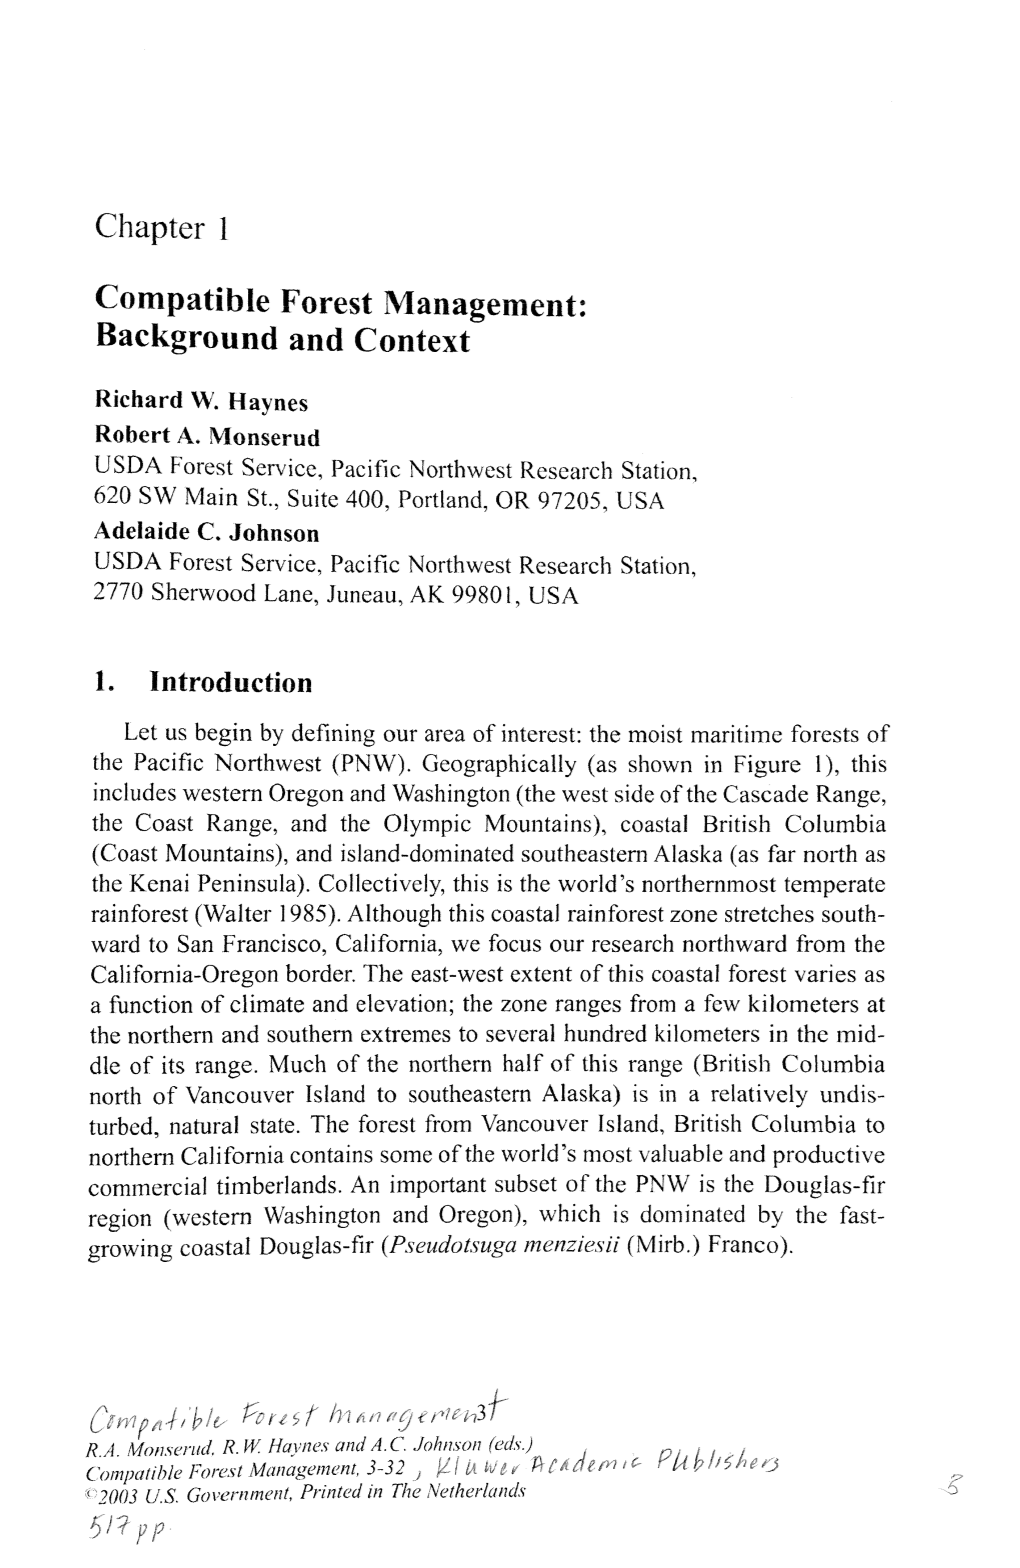 Chapter 1 Compatible Forest Management